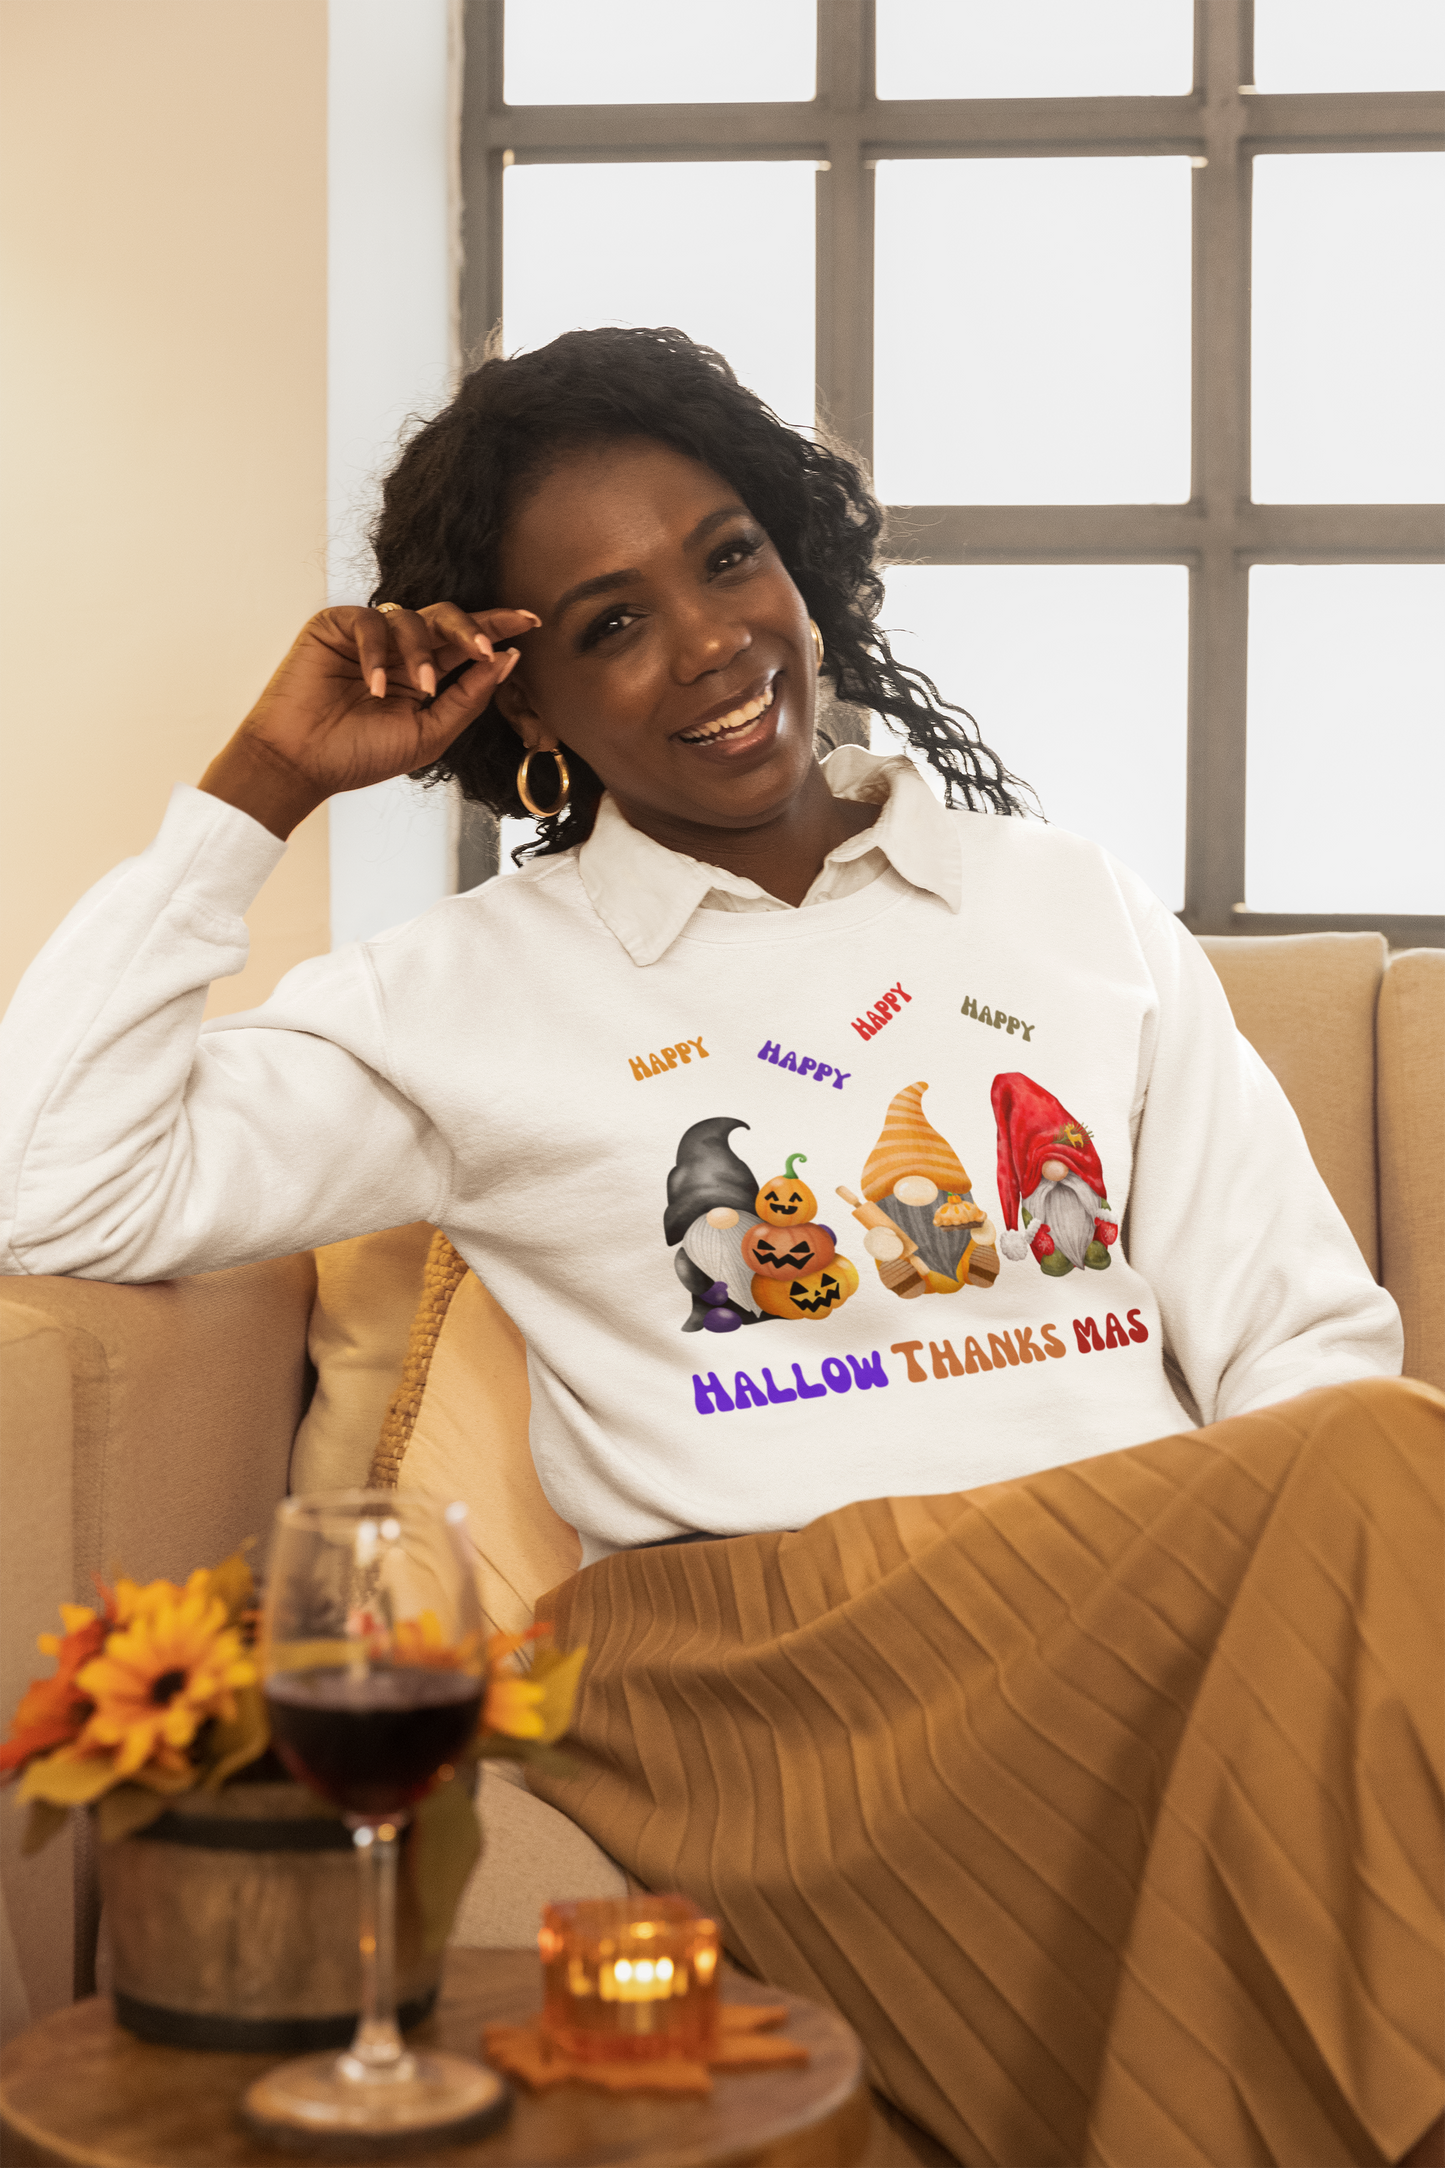 Hallothanksmas Sweatshirt, Thanksgiving T-shirt, Christmas Sweater, Halloween Shirt, Funny Gnome T-Shirt, Gift for Her, Woman's Shirt